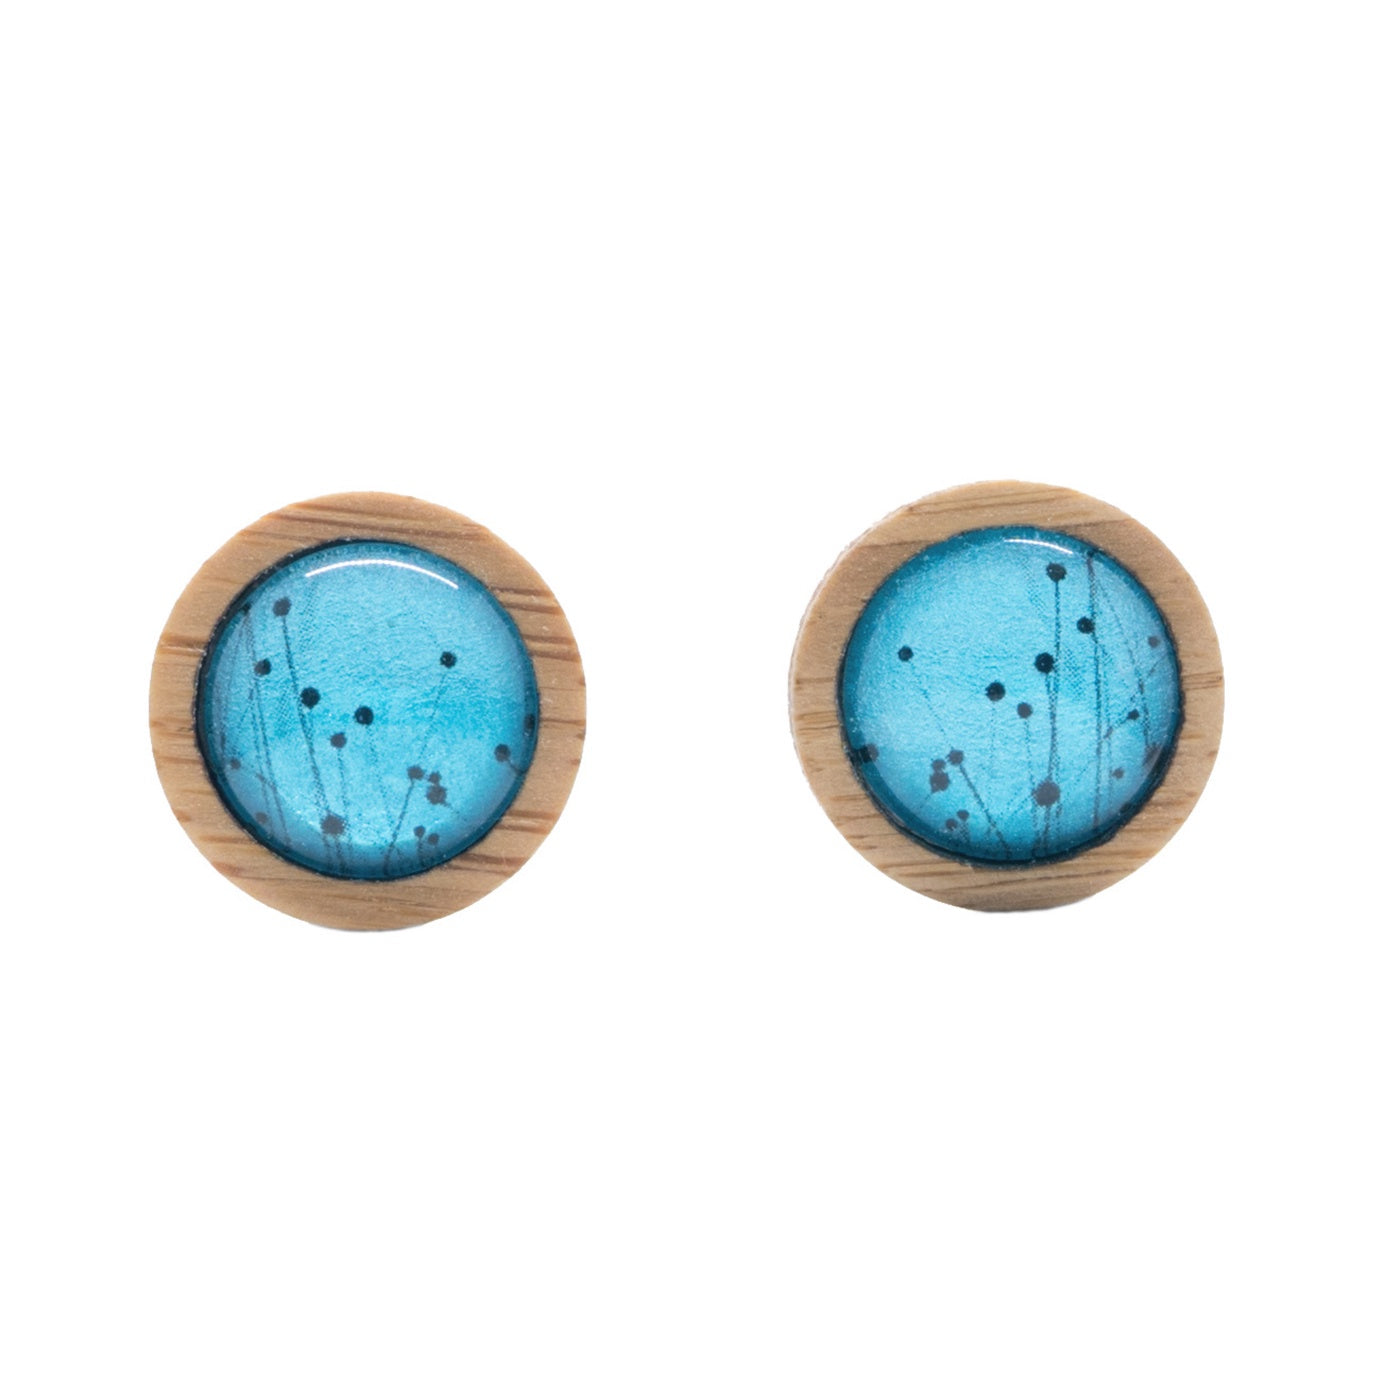 Myrtle & Me - Stud Earrings - Buttongrass - Metallic Blue